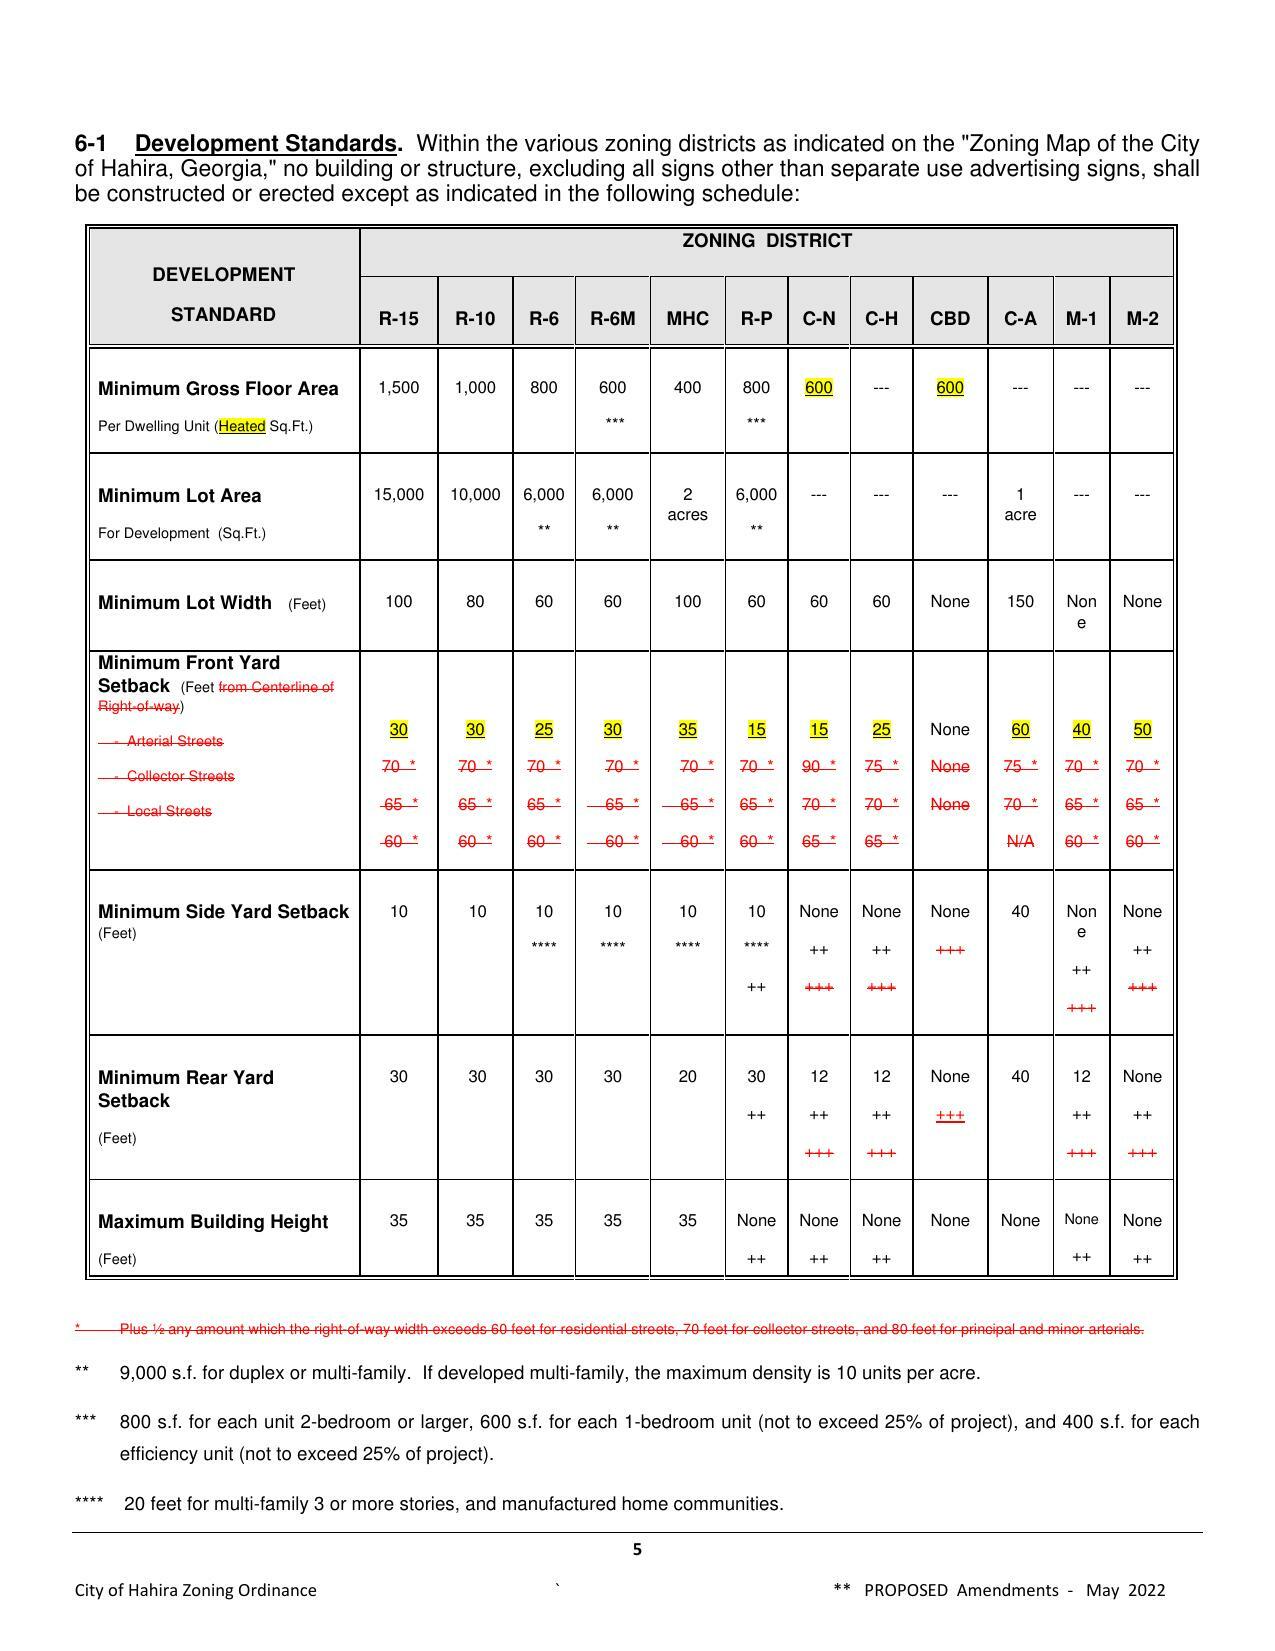 Development Standards table